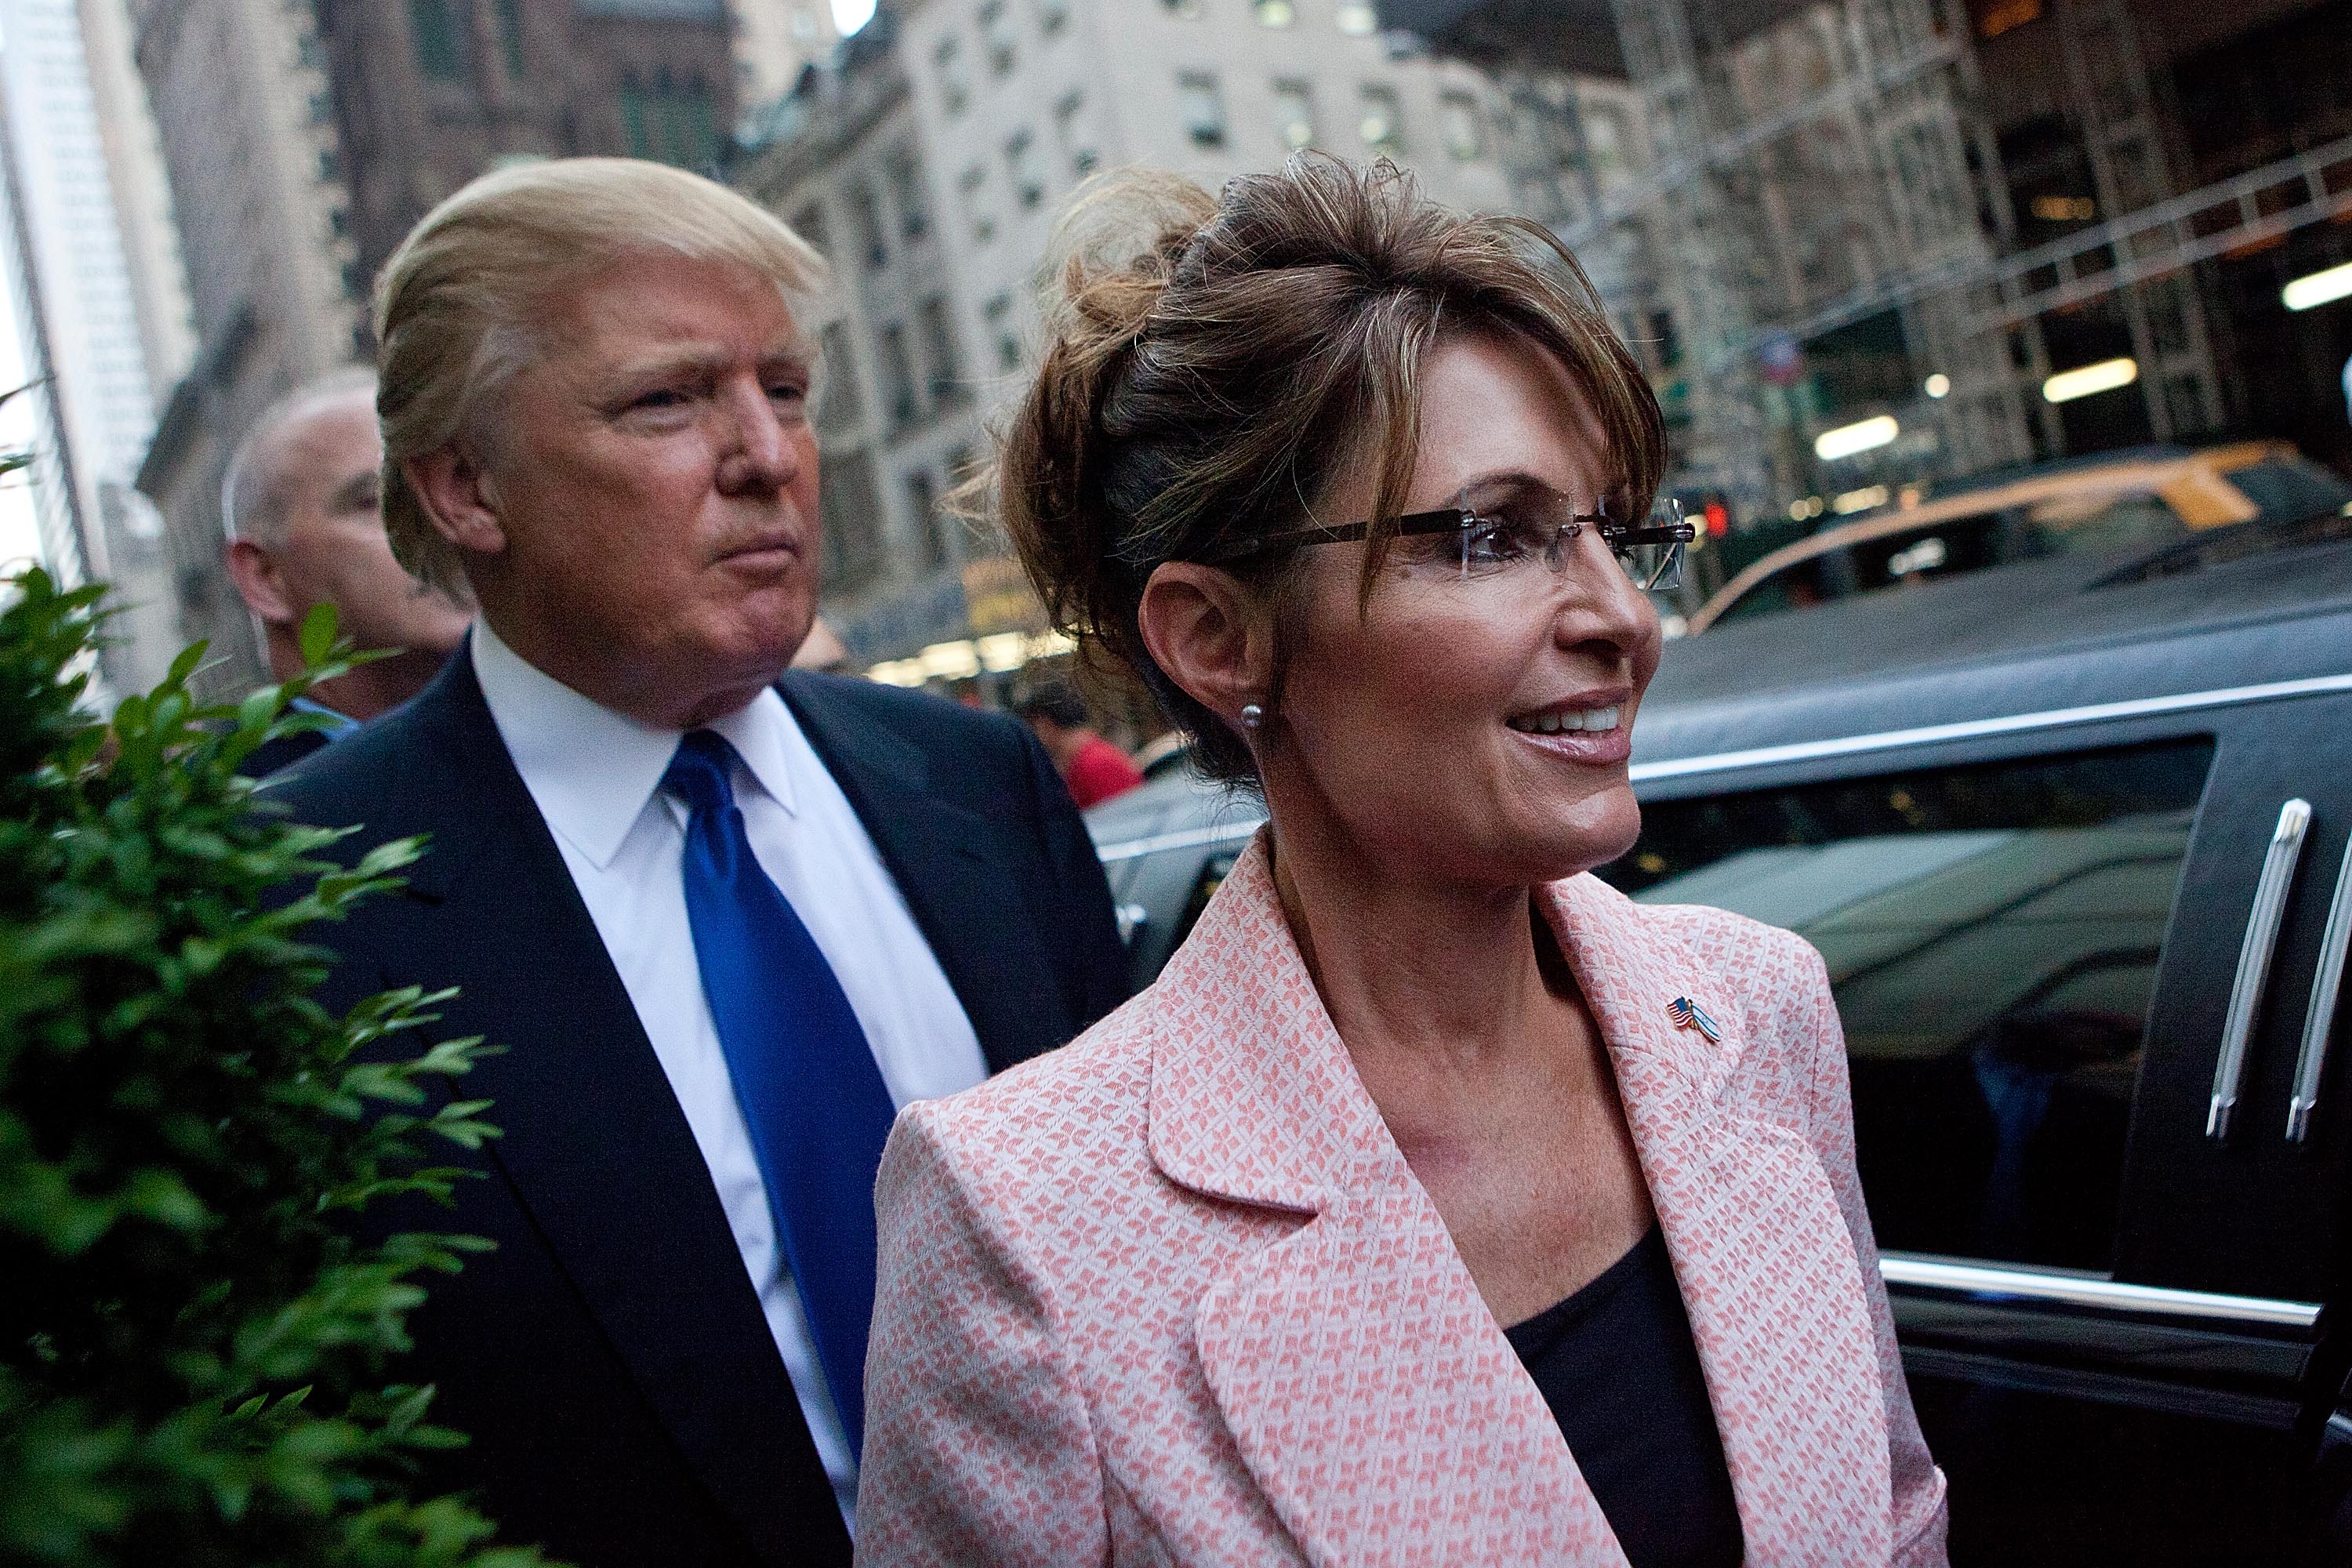 Sarah Palin Meets With Donald Trump In New York During Her Bus Tour